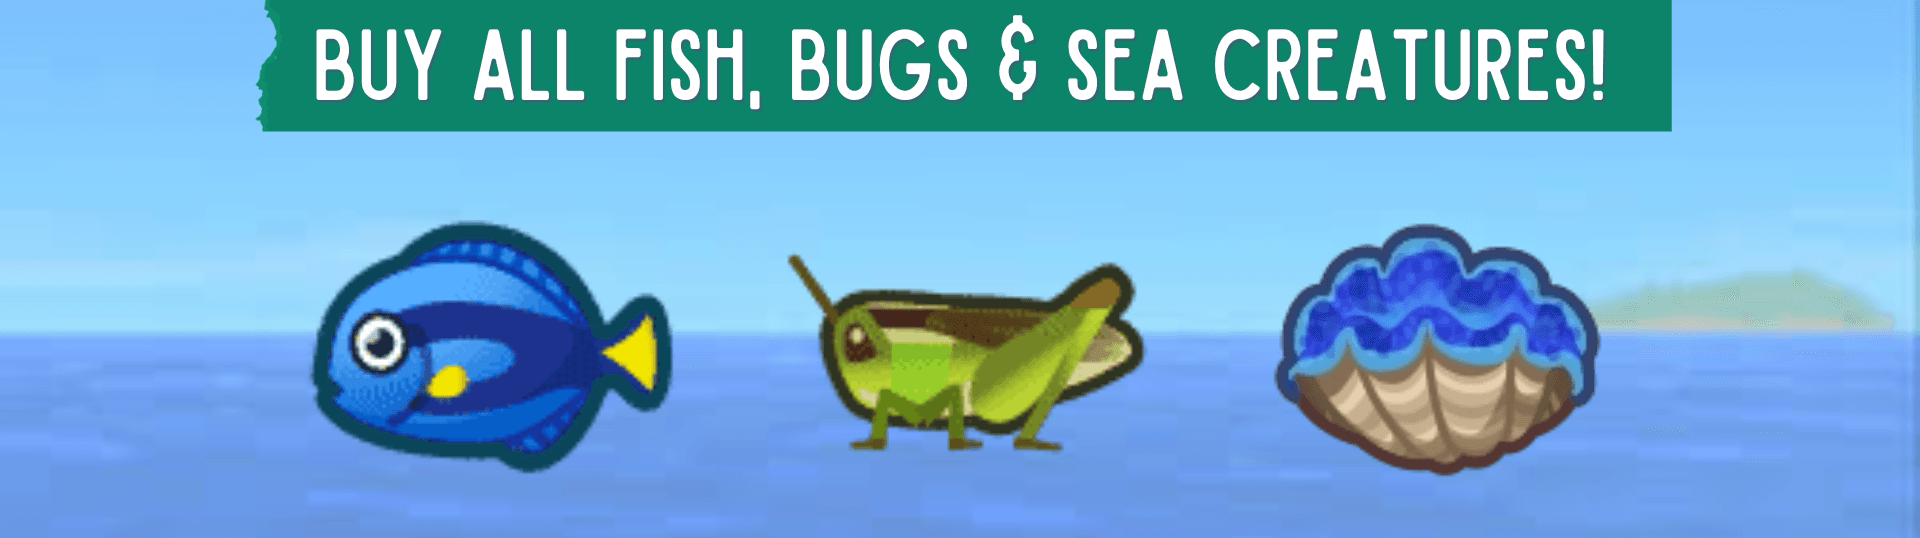 Animal Crossing New Horizons Buy Live Animals, Fish, Bugs, Sea Animals 